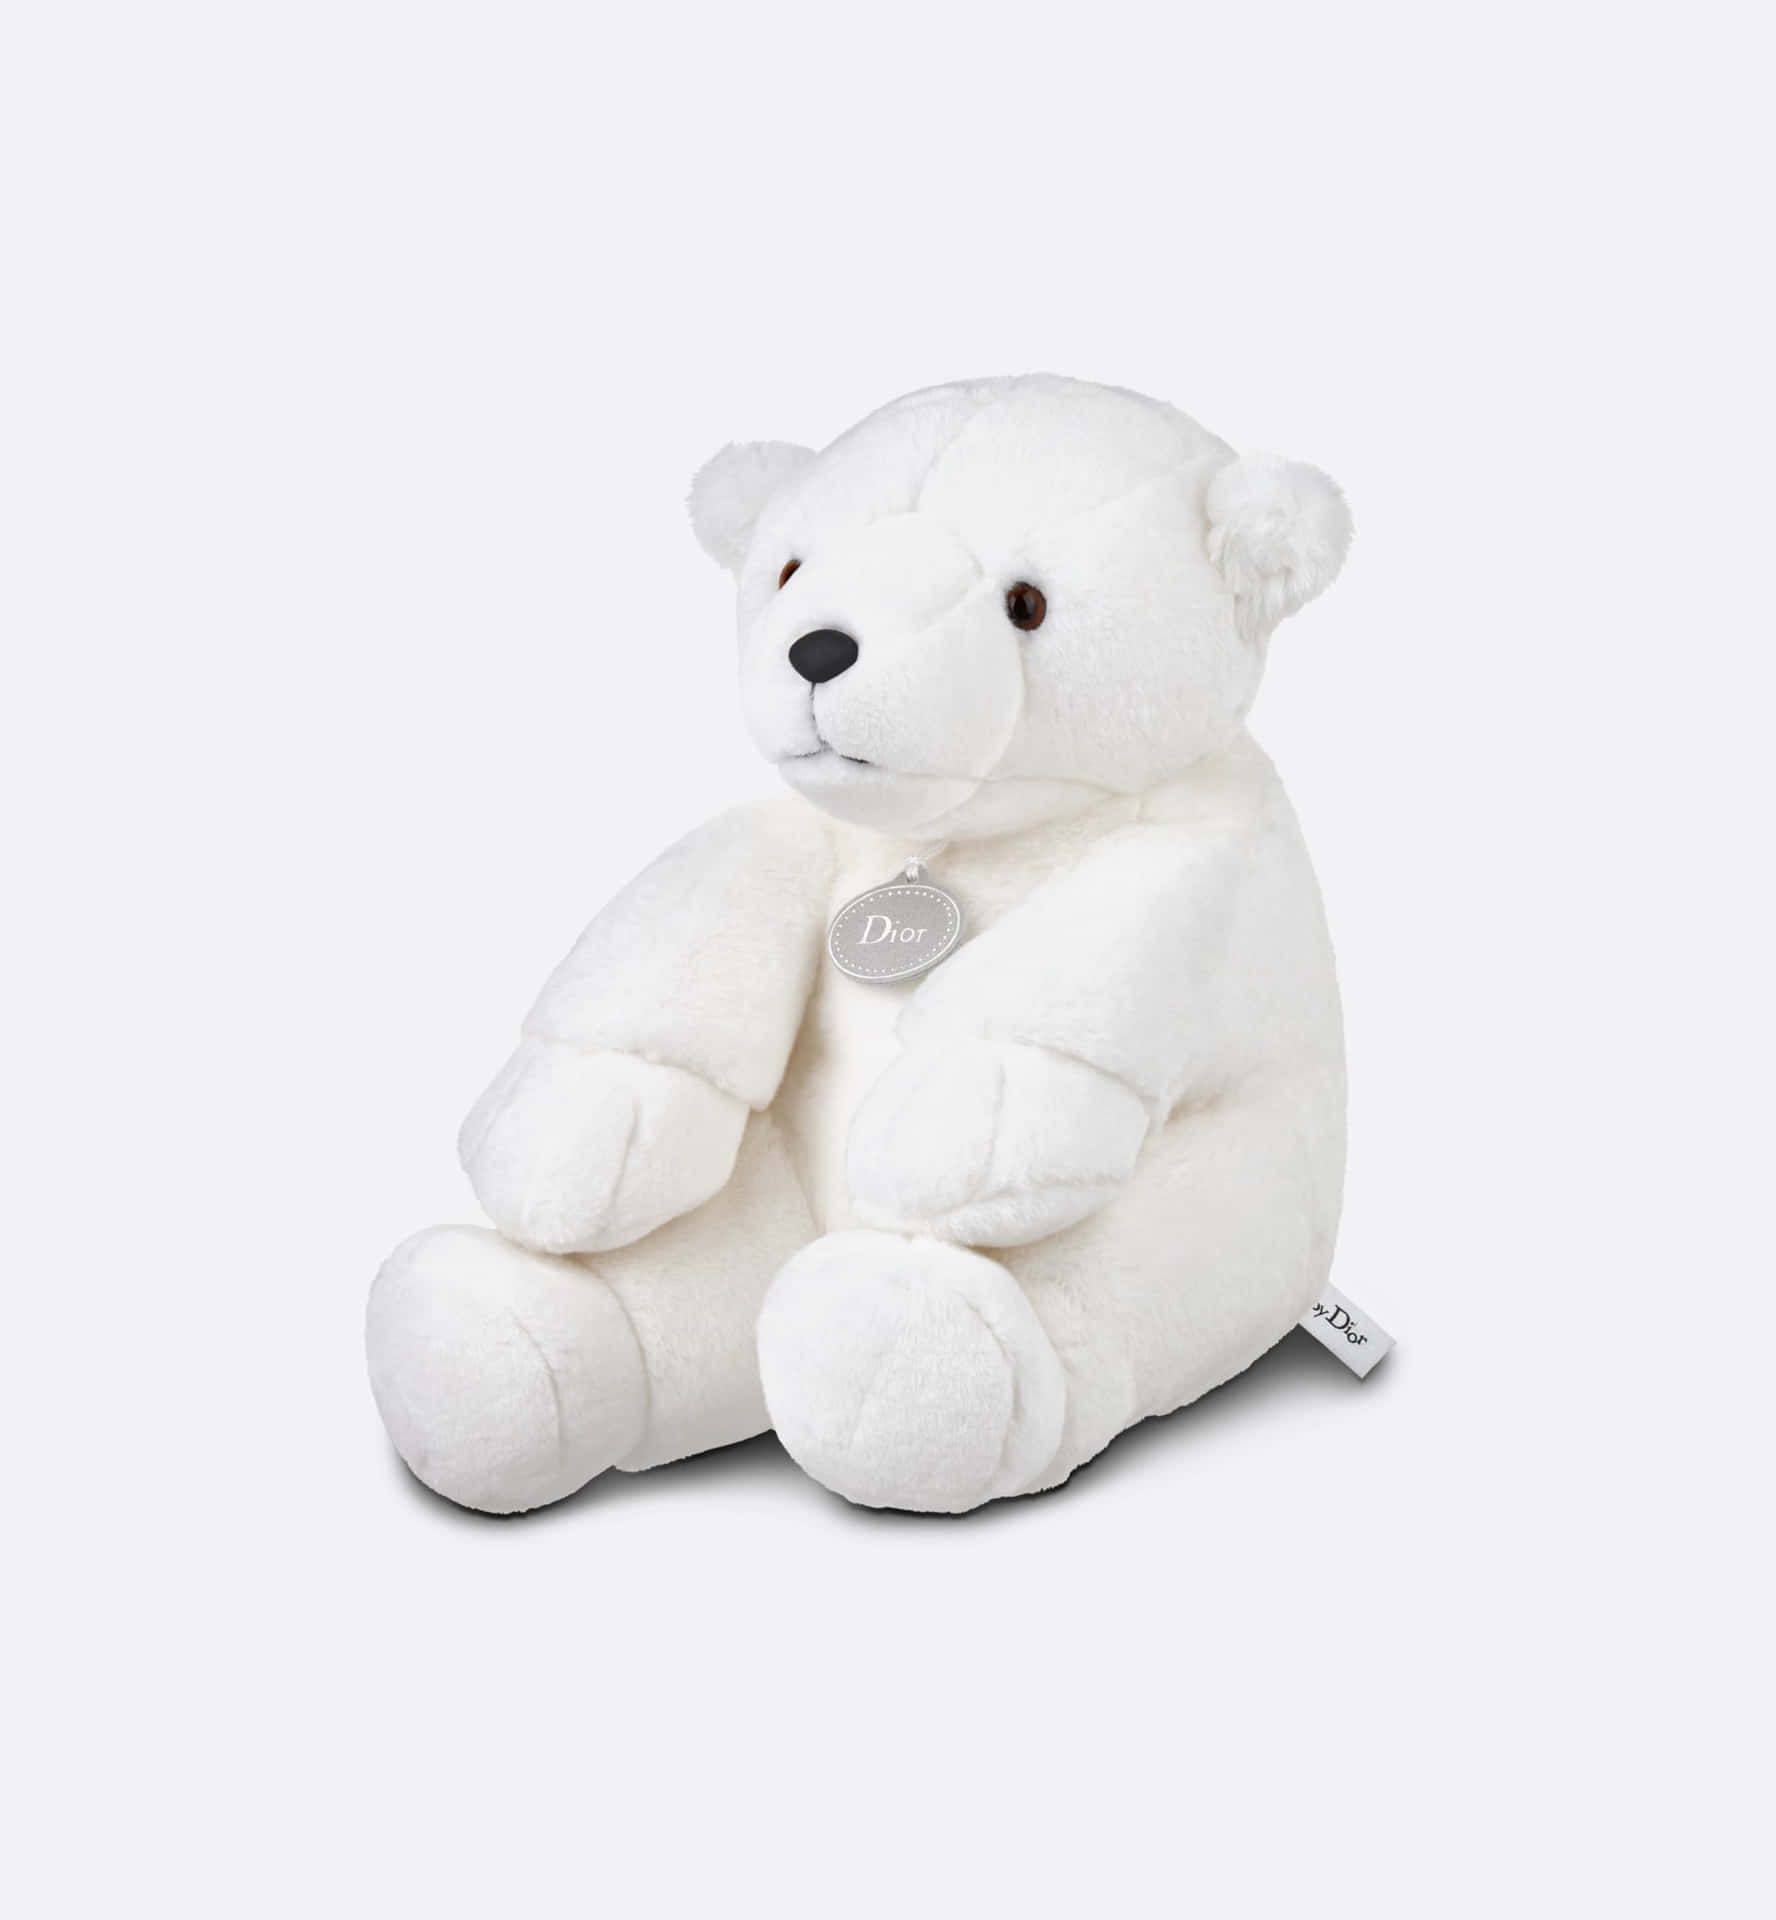 A White Stuffed Polar Bear Sitting On A White Background